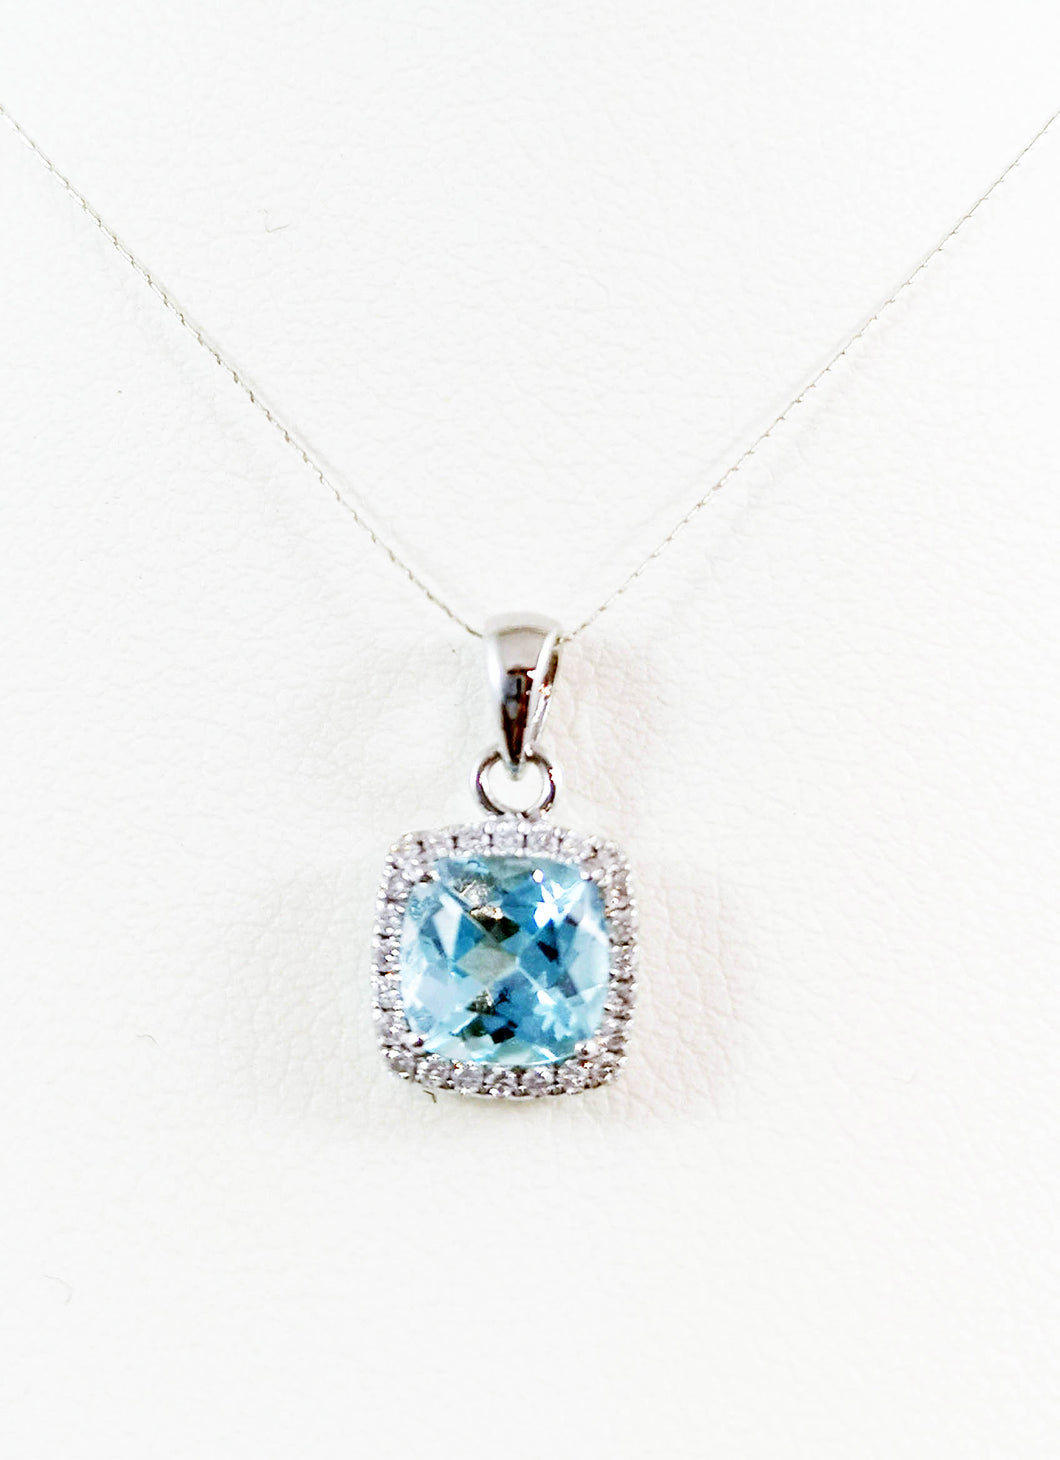 14kt White Gold Diamond and Genuine Blue Topaz pendent